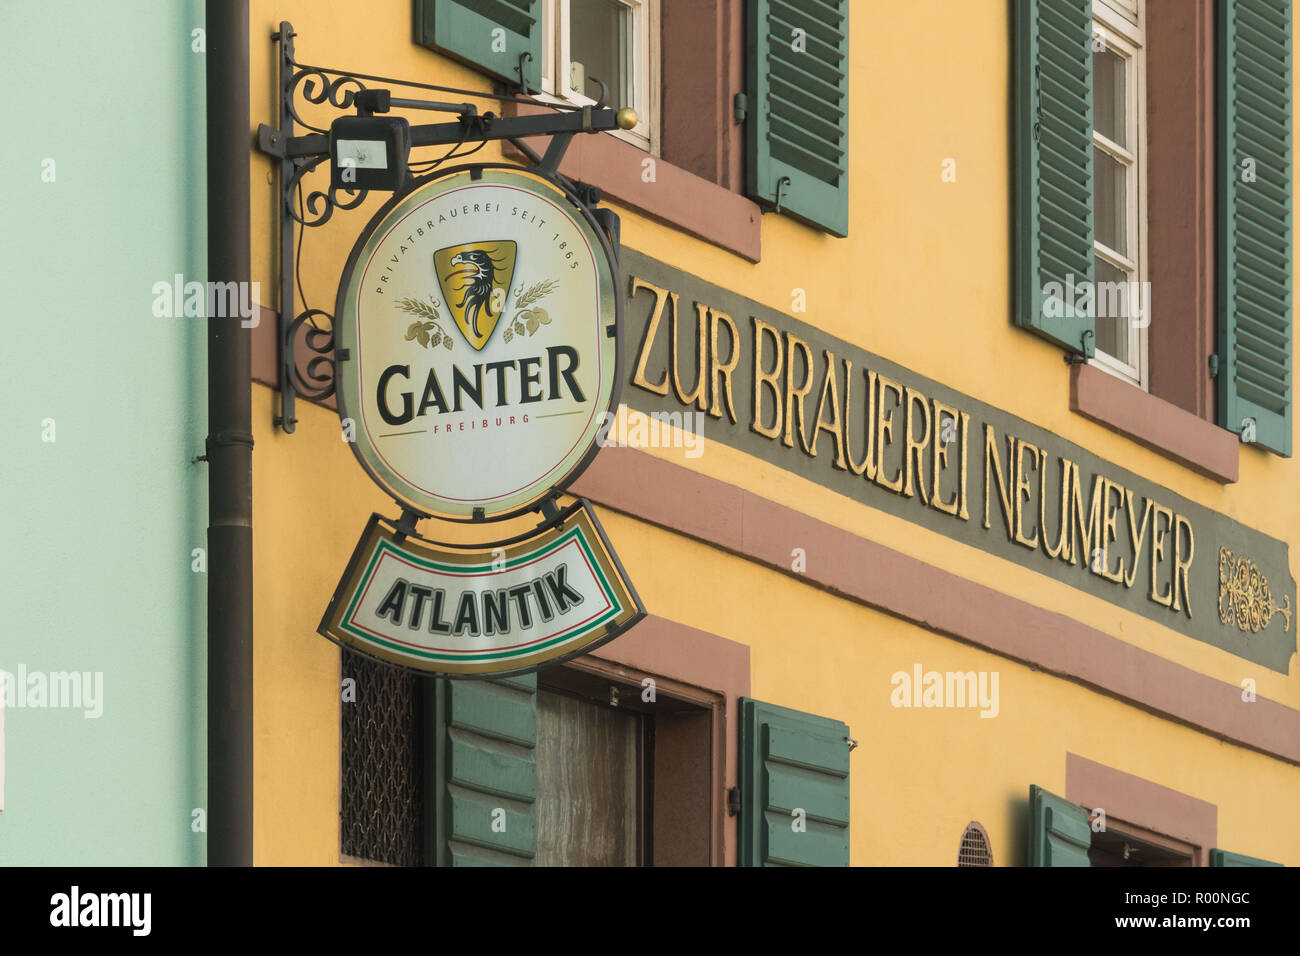 Ganter Bier beer sign hanging outside the Atlantik Bar, Freiburg im Breisgau, Germany Stock Photo